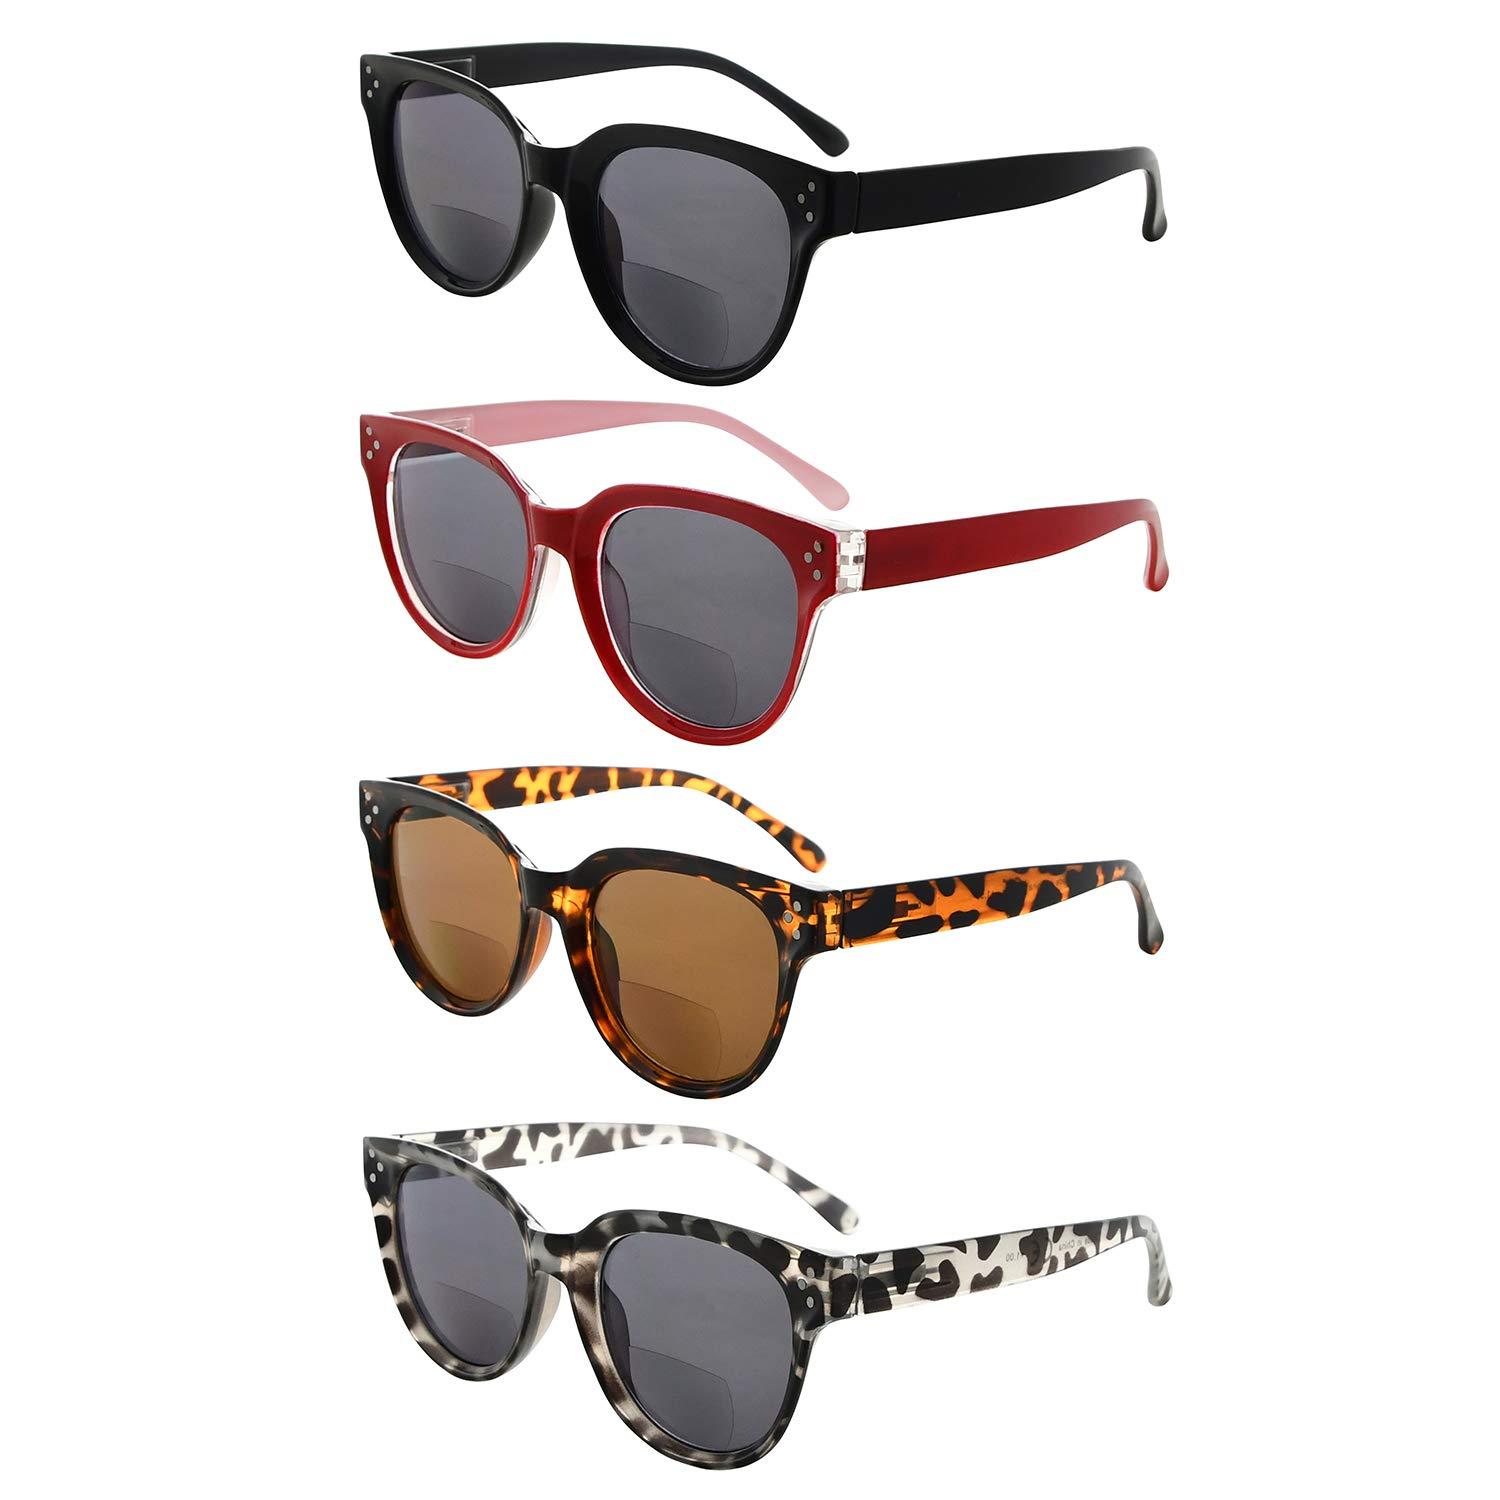 Eyekepper 4-packing Bifocal Glasses for Women Reading under the Sun Stylish Bifocal Readers Tinted Lens +2.00 4